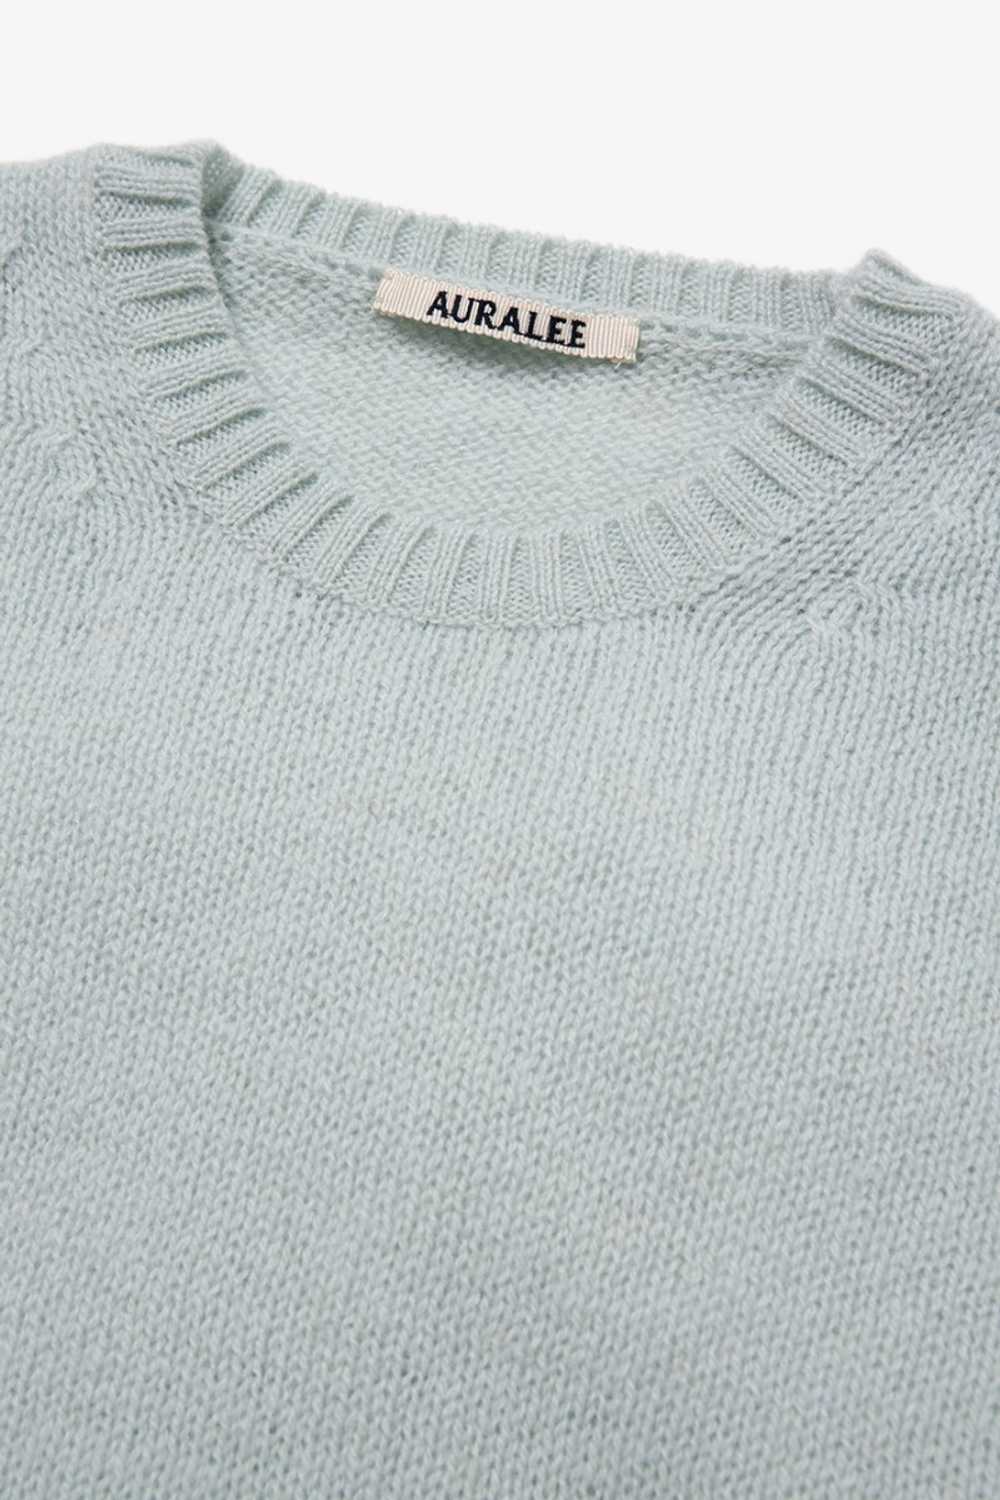 Auralee - pure shetland wool knit sweater mint 5 - image 2